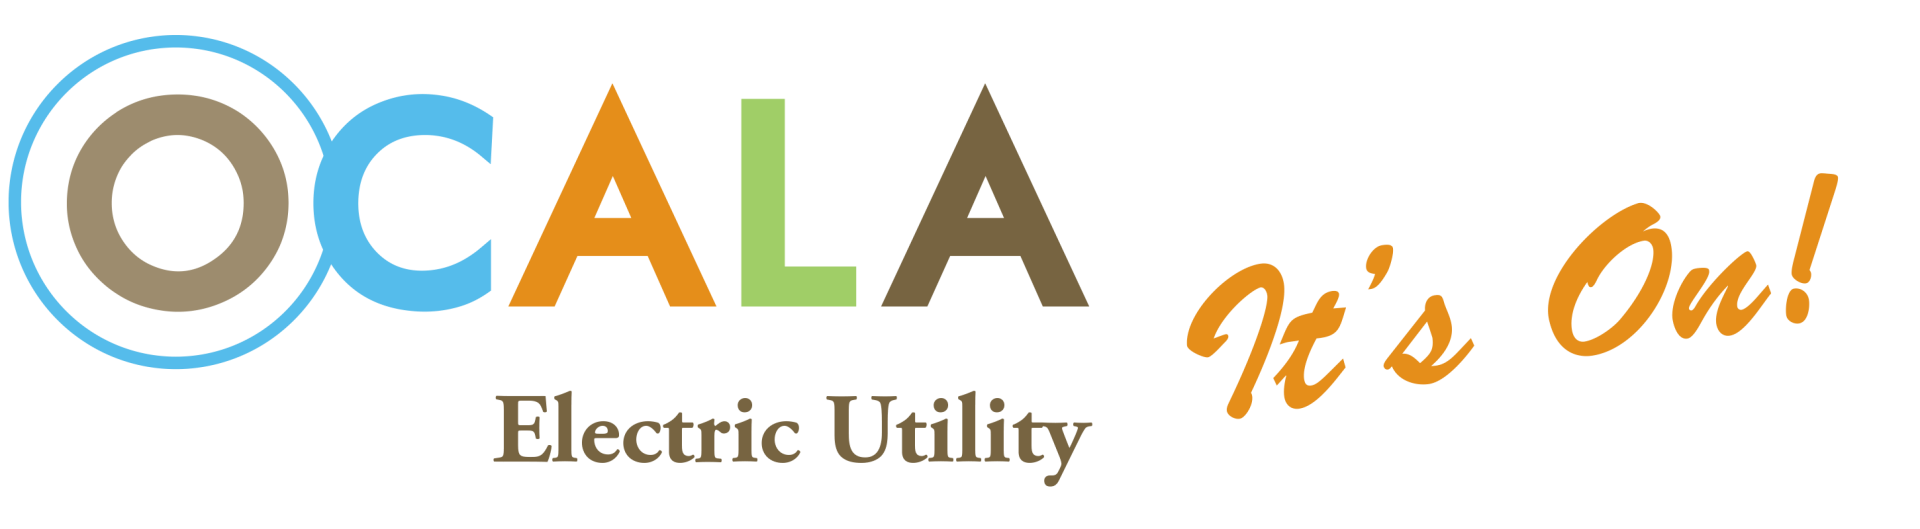 Ocala Electirc Utility logo